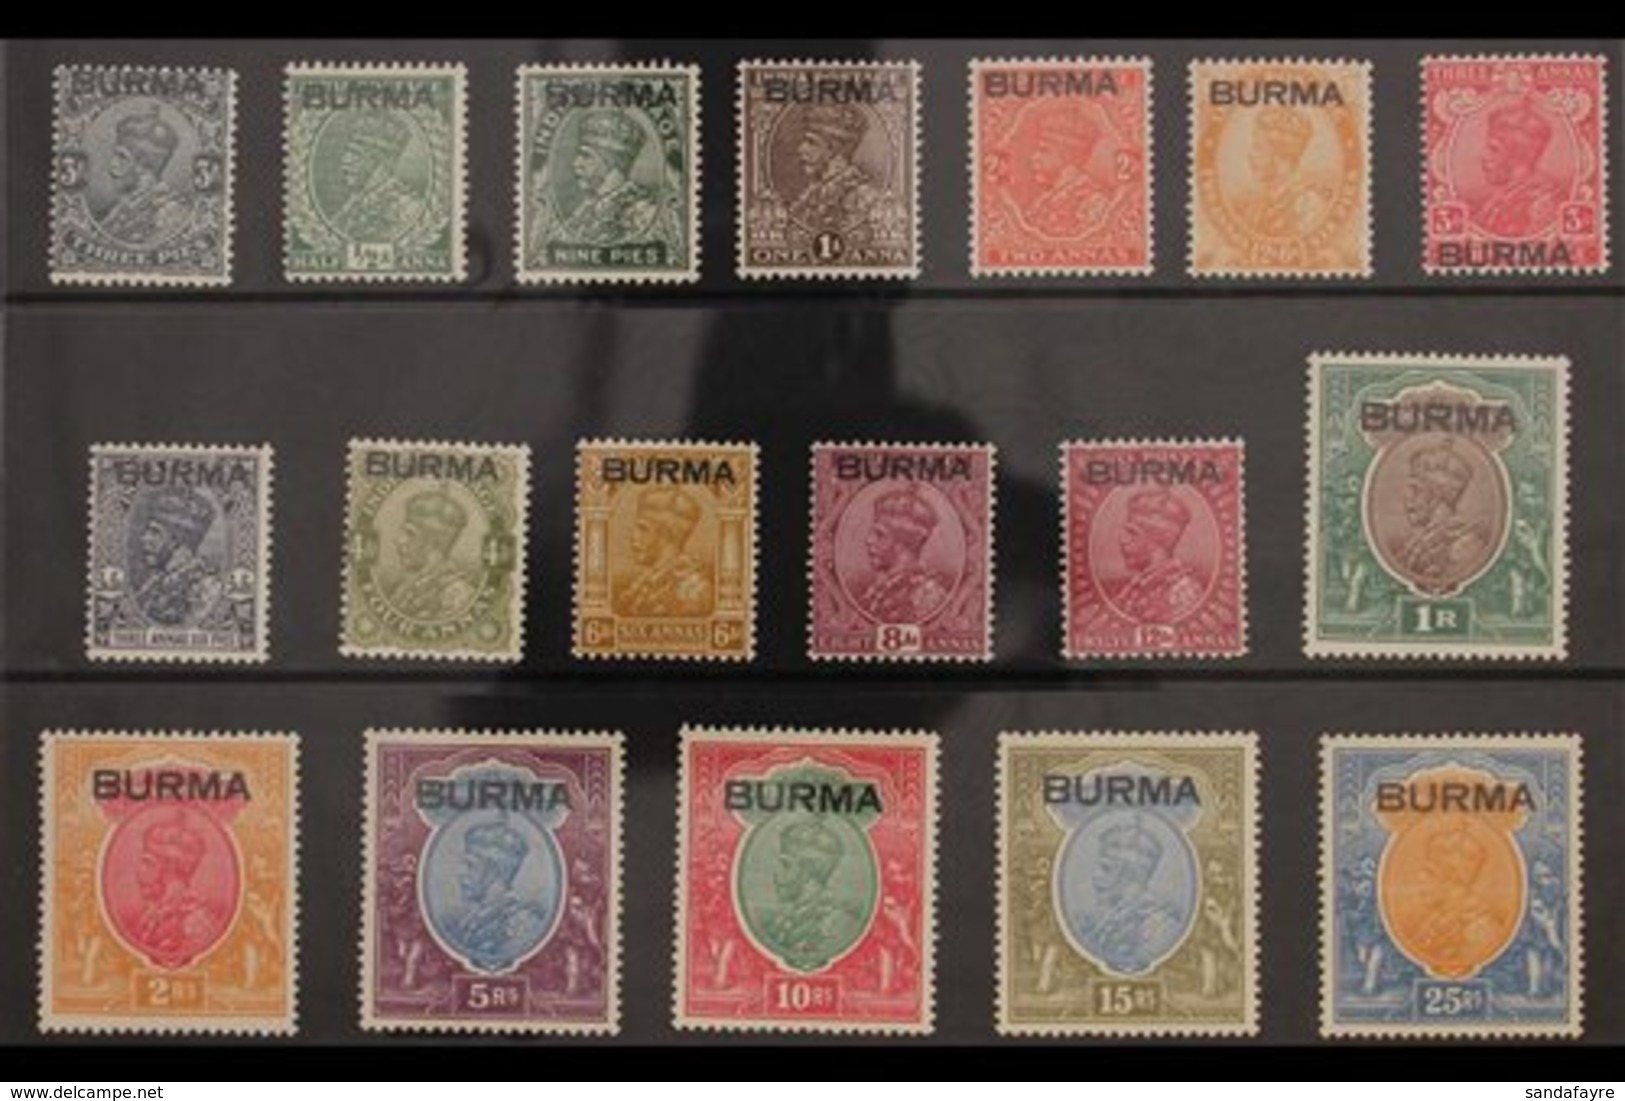 1937 (India KGV Overprinted) Complete Set, The 25R Watermark Inverted, SG 1/18aw, Very Fine Lightly Hinged Mint. Splendi - Burma (...-1947)